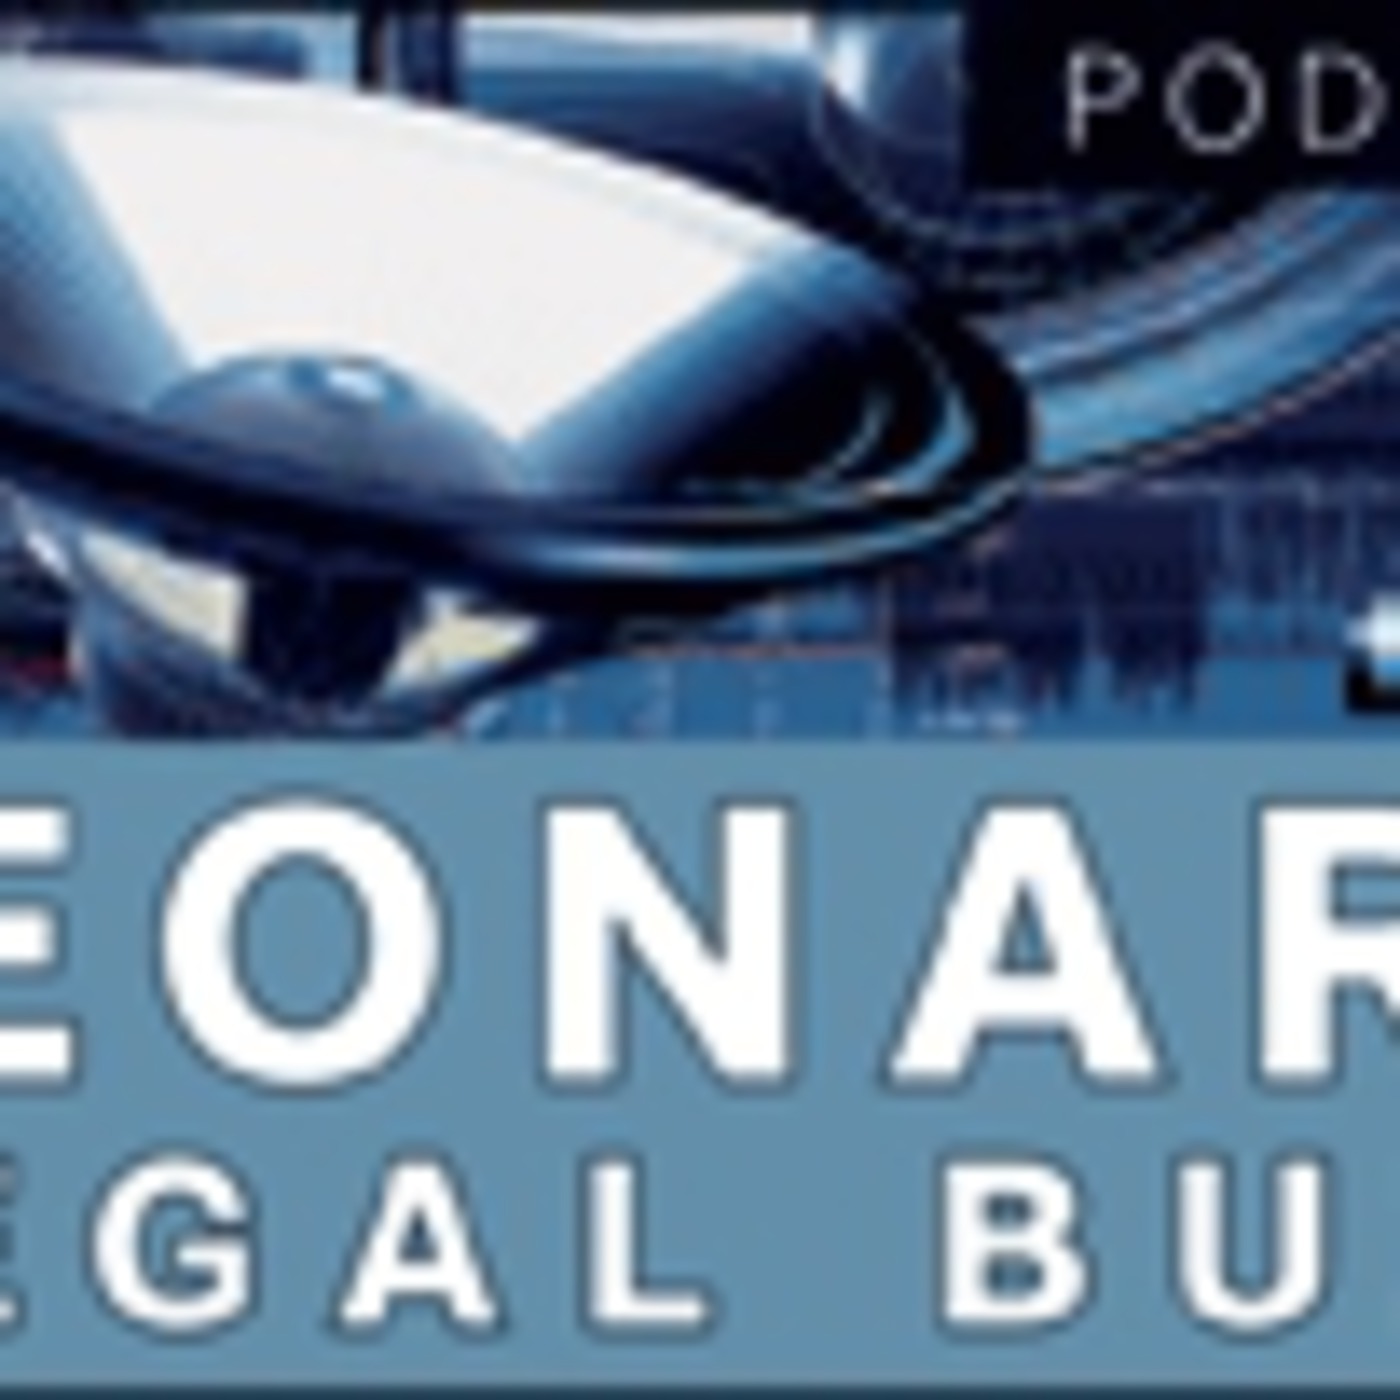 Leonard Legal Buzz